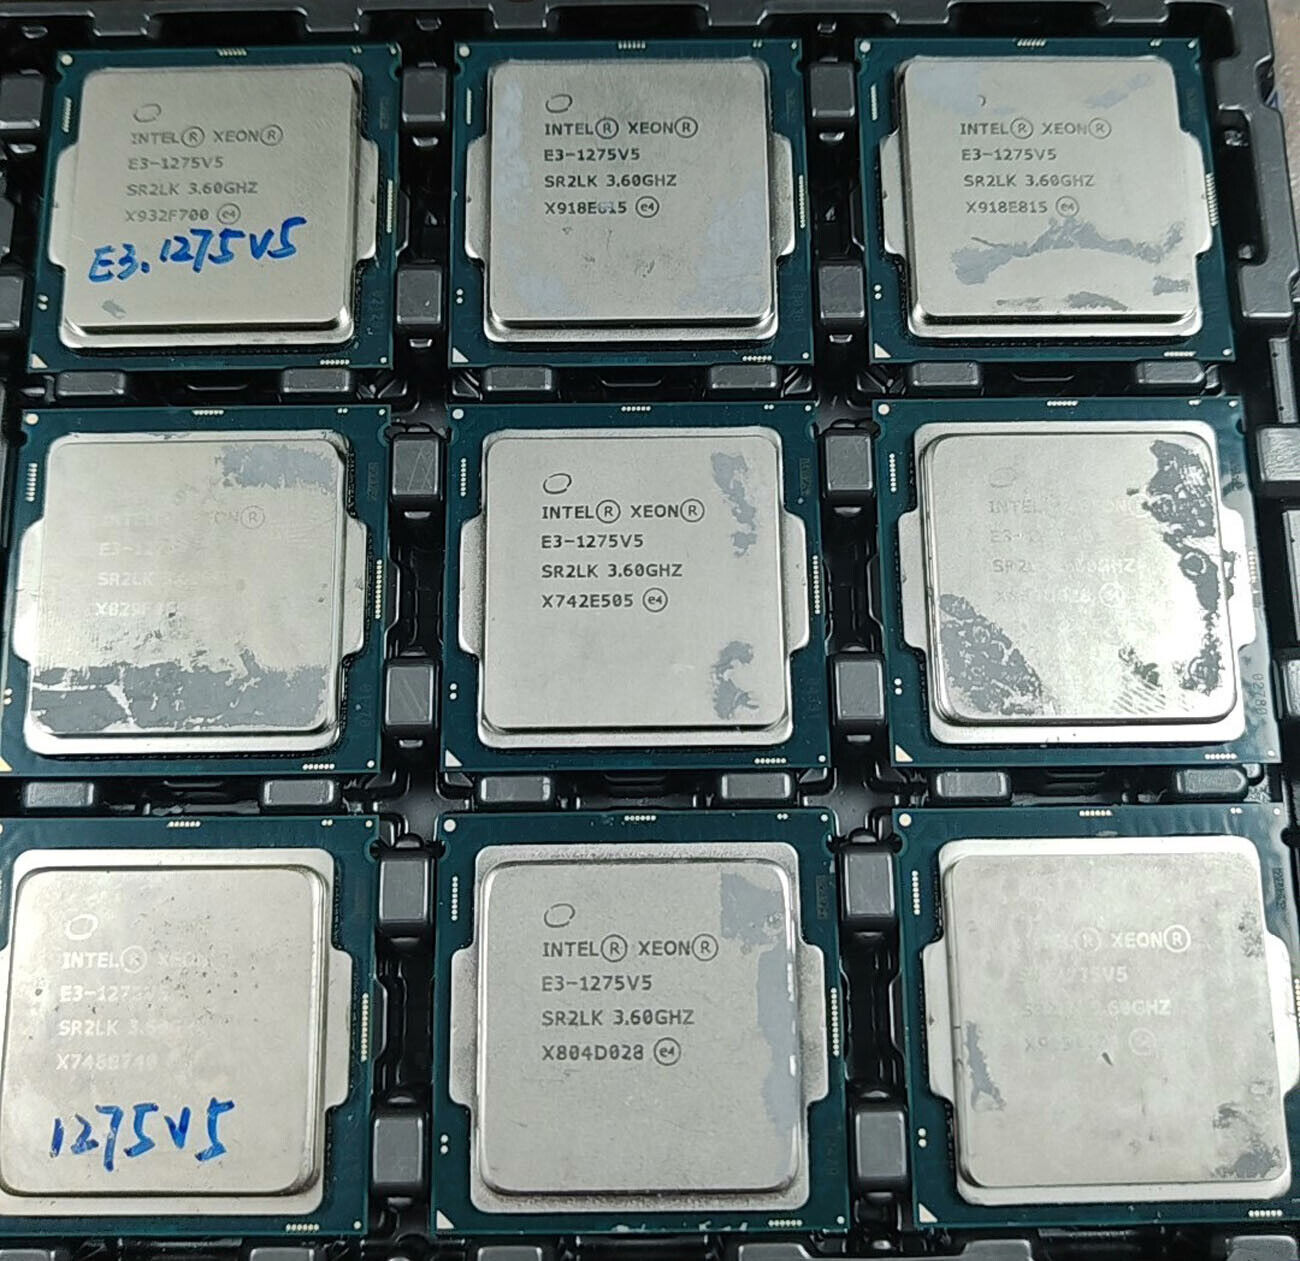 Intel Xeon E3-1275 V5 3.60GHz 4-core 8-thread 8MB 80W LGA1150 CPU processor